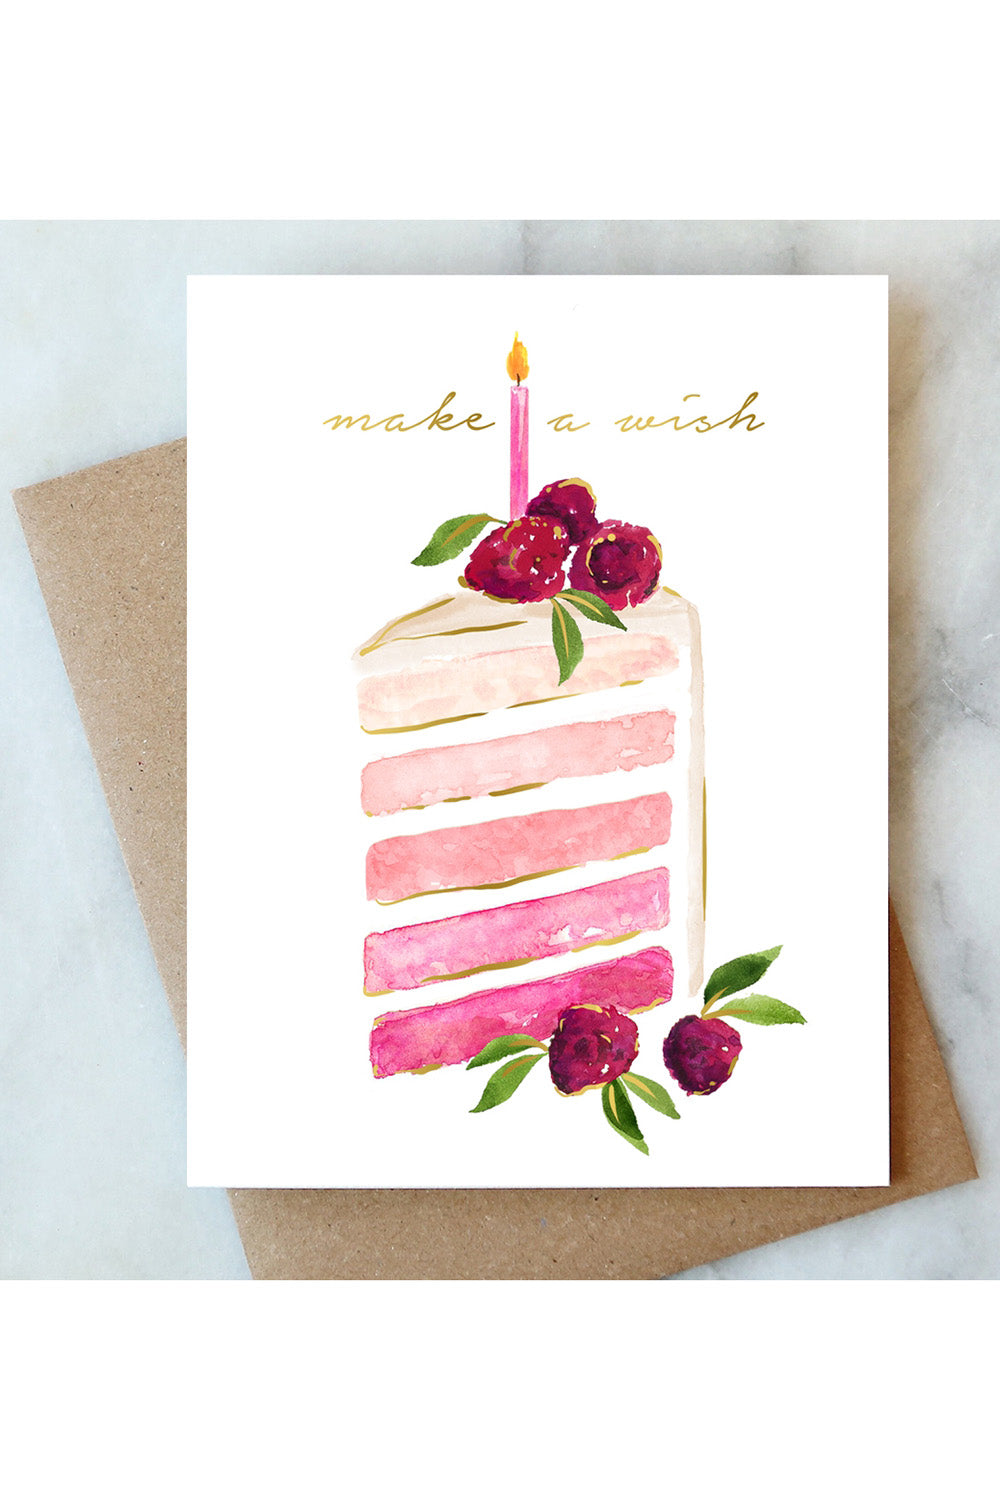 AJD Birthday Card - Slice of Cake